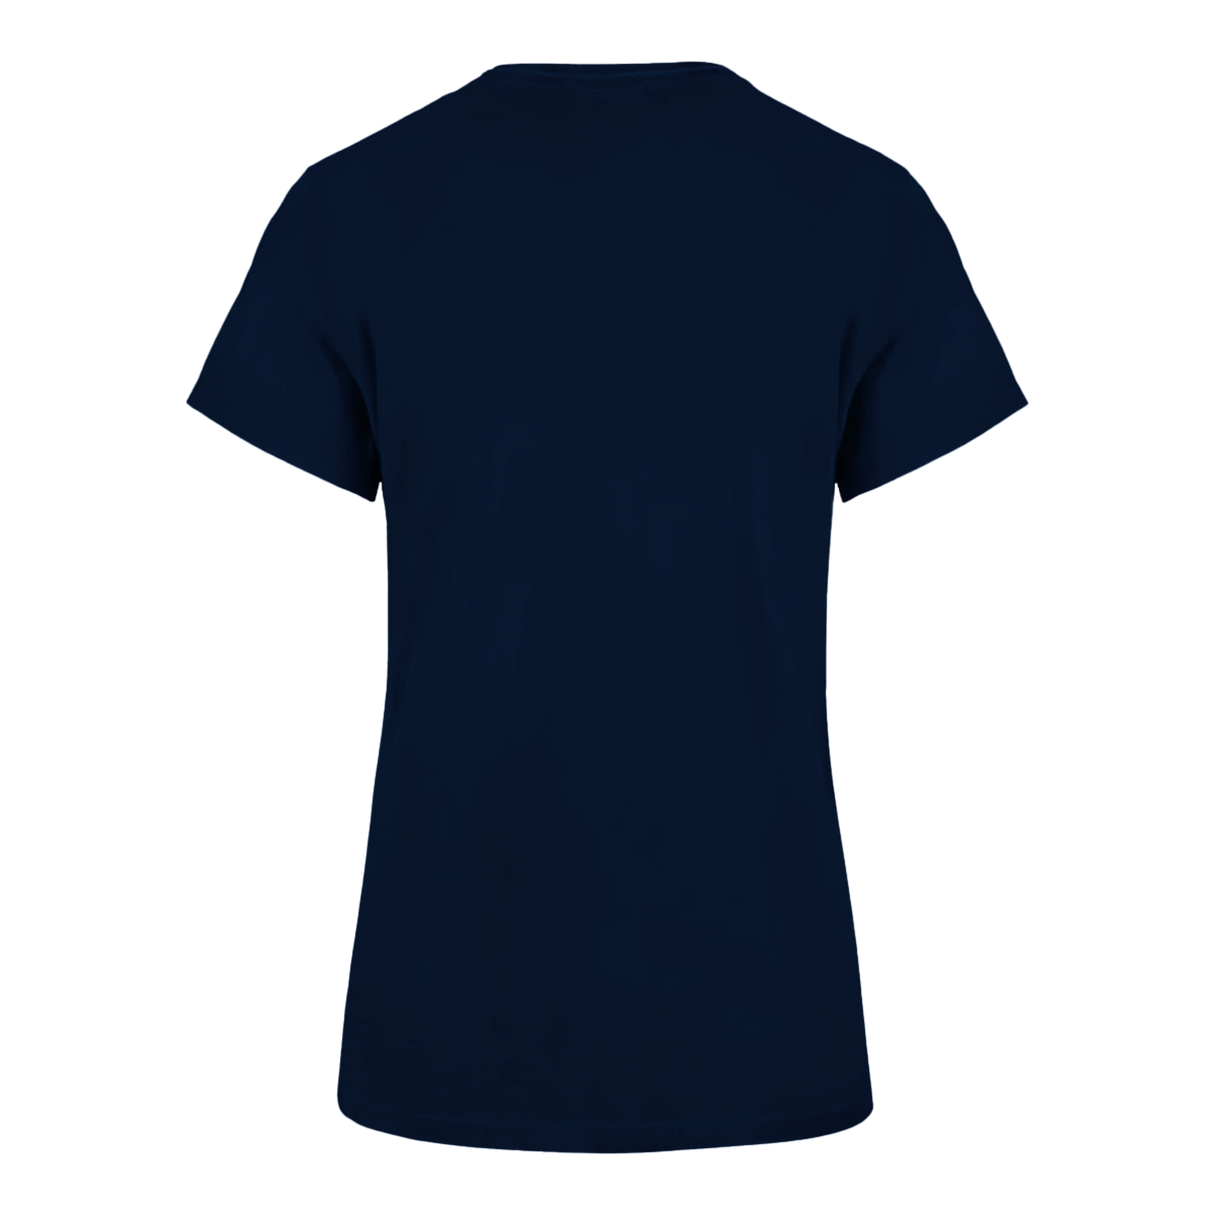 Tennessee Titans Crown Women's Short Sleeve T-Shirt